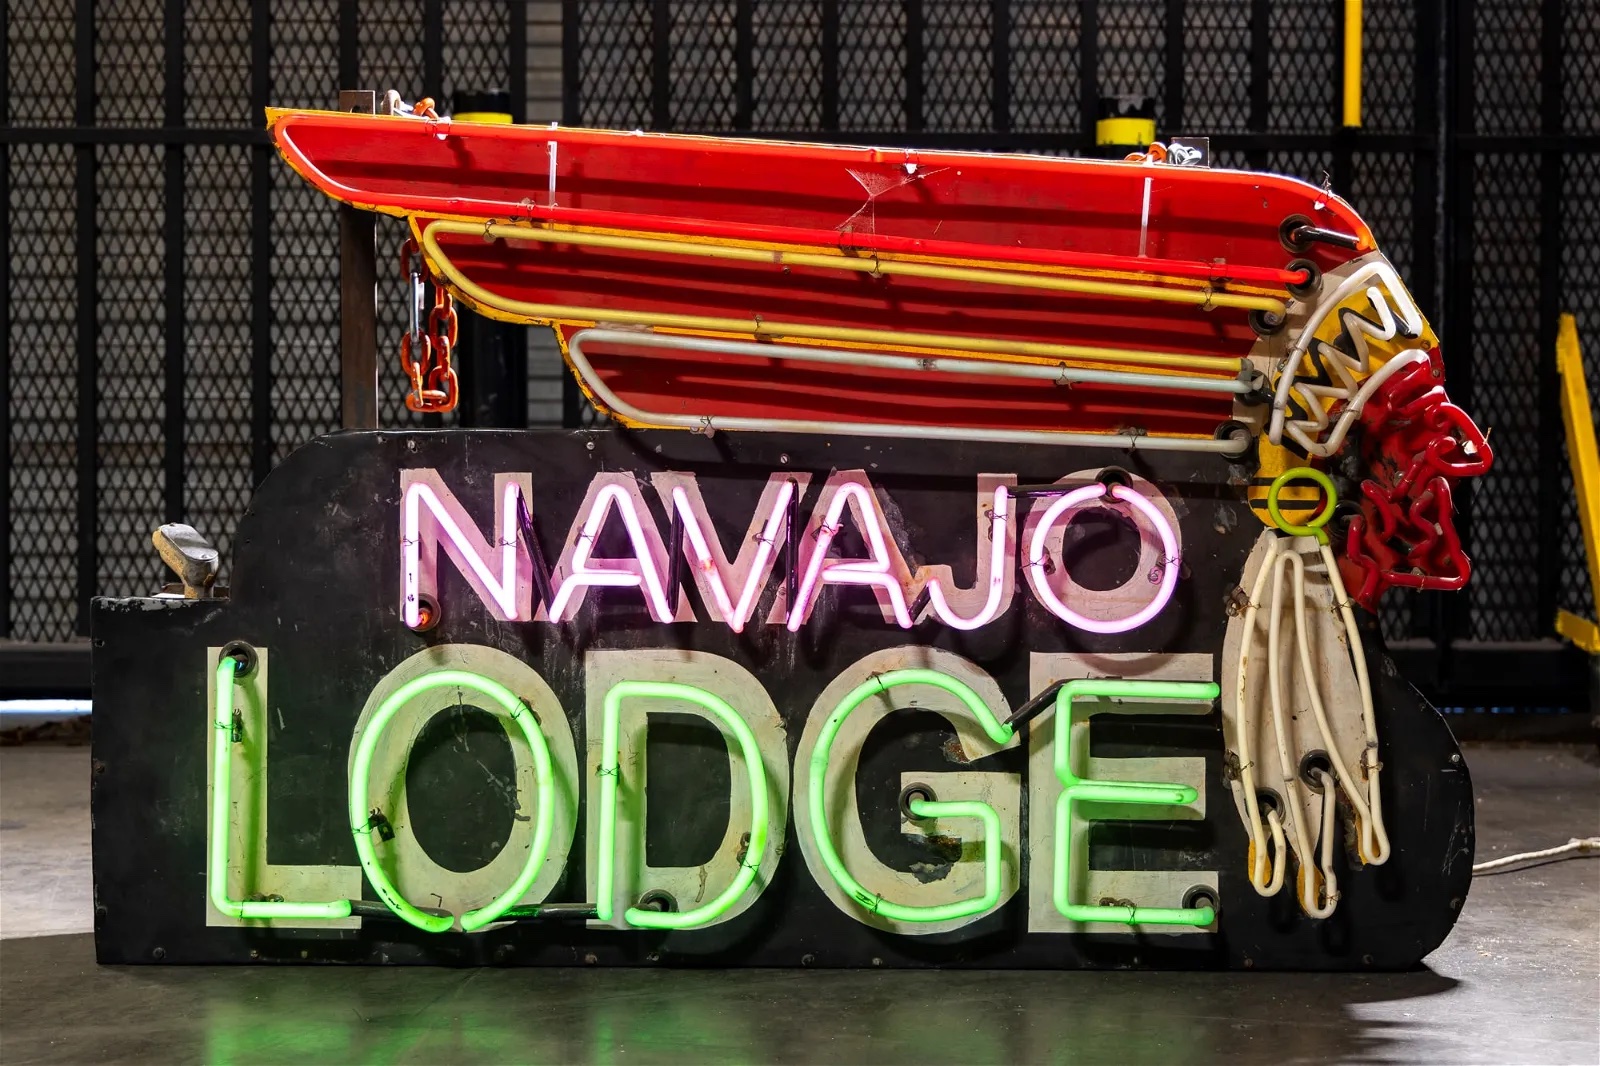 Navajo Lodge neon sign, estimated at $10-$100,000 at Abell.